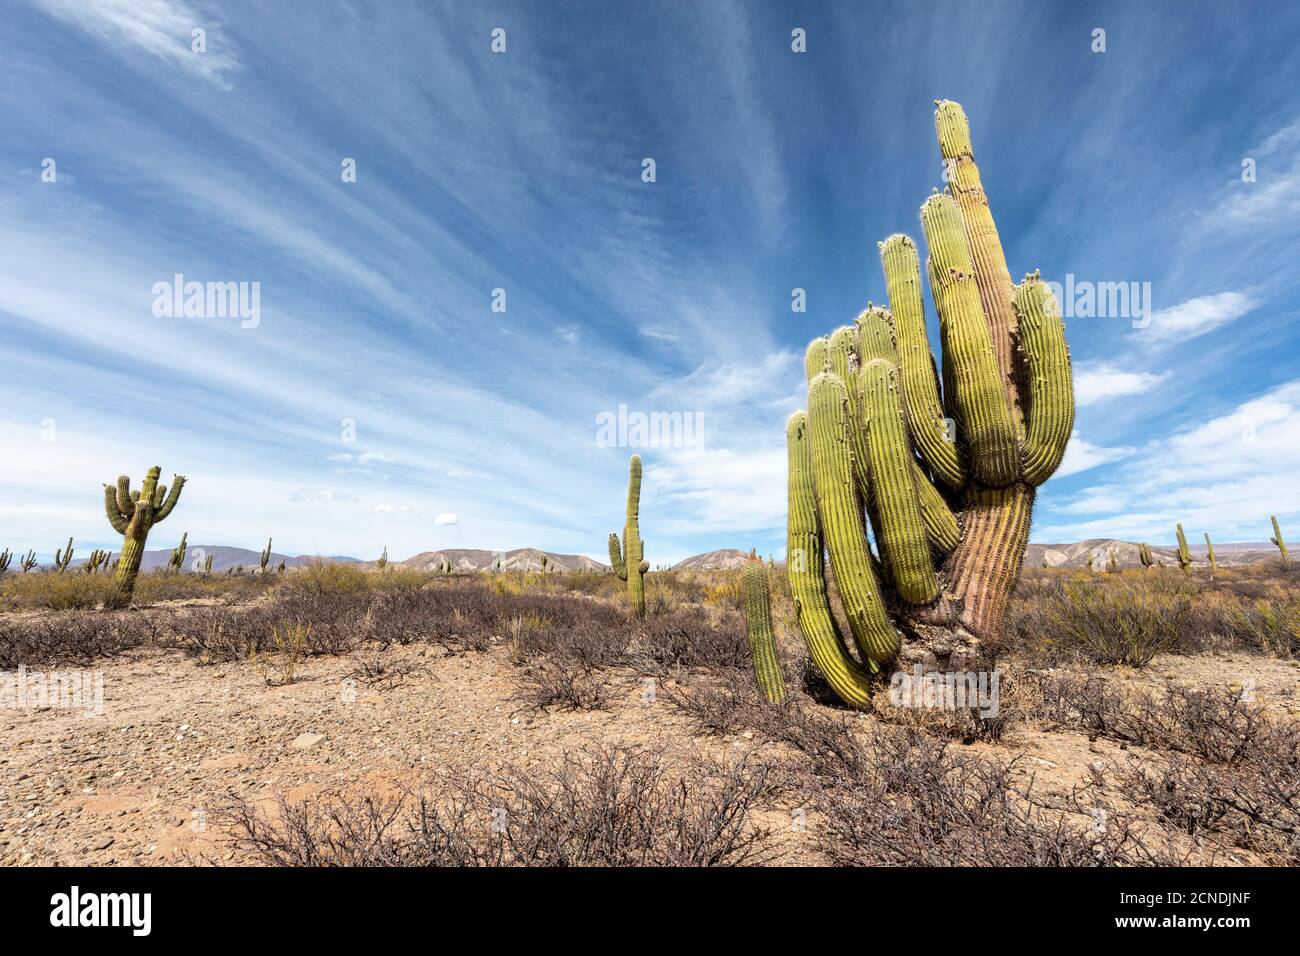 Argentine saguaro cactus (Echinopsis terscheckii), Los Cardones National Park, Salta Province, Argentina Stock Photo